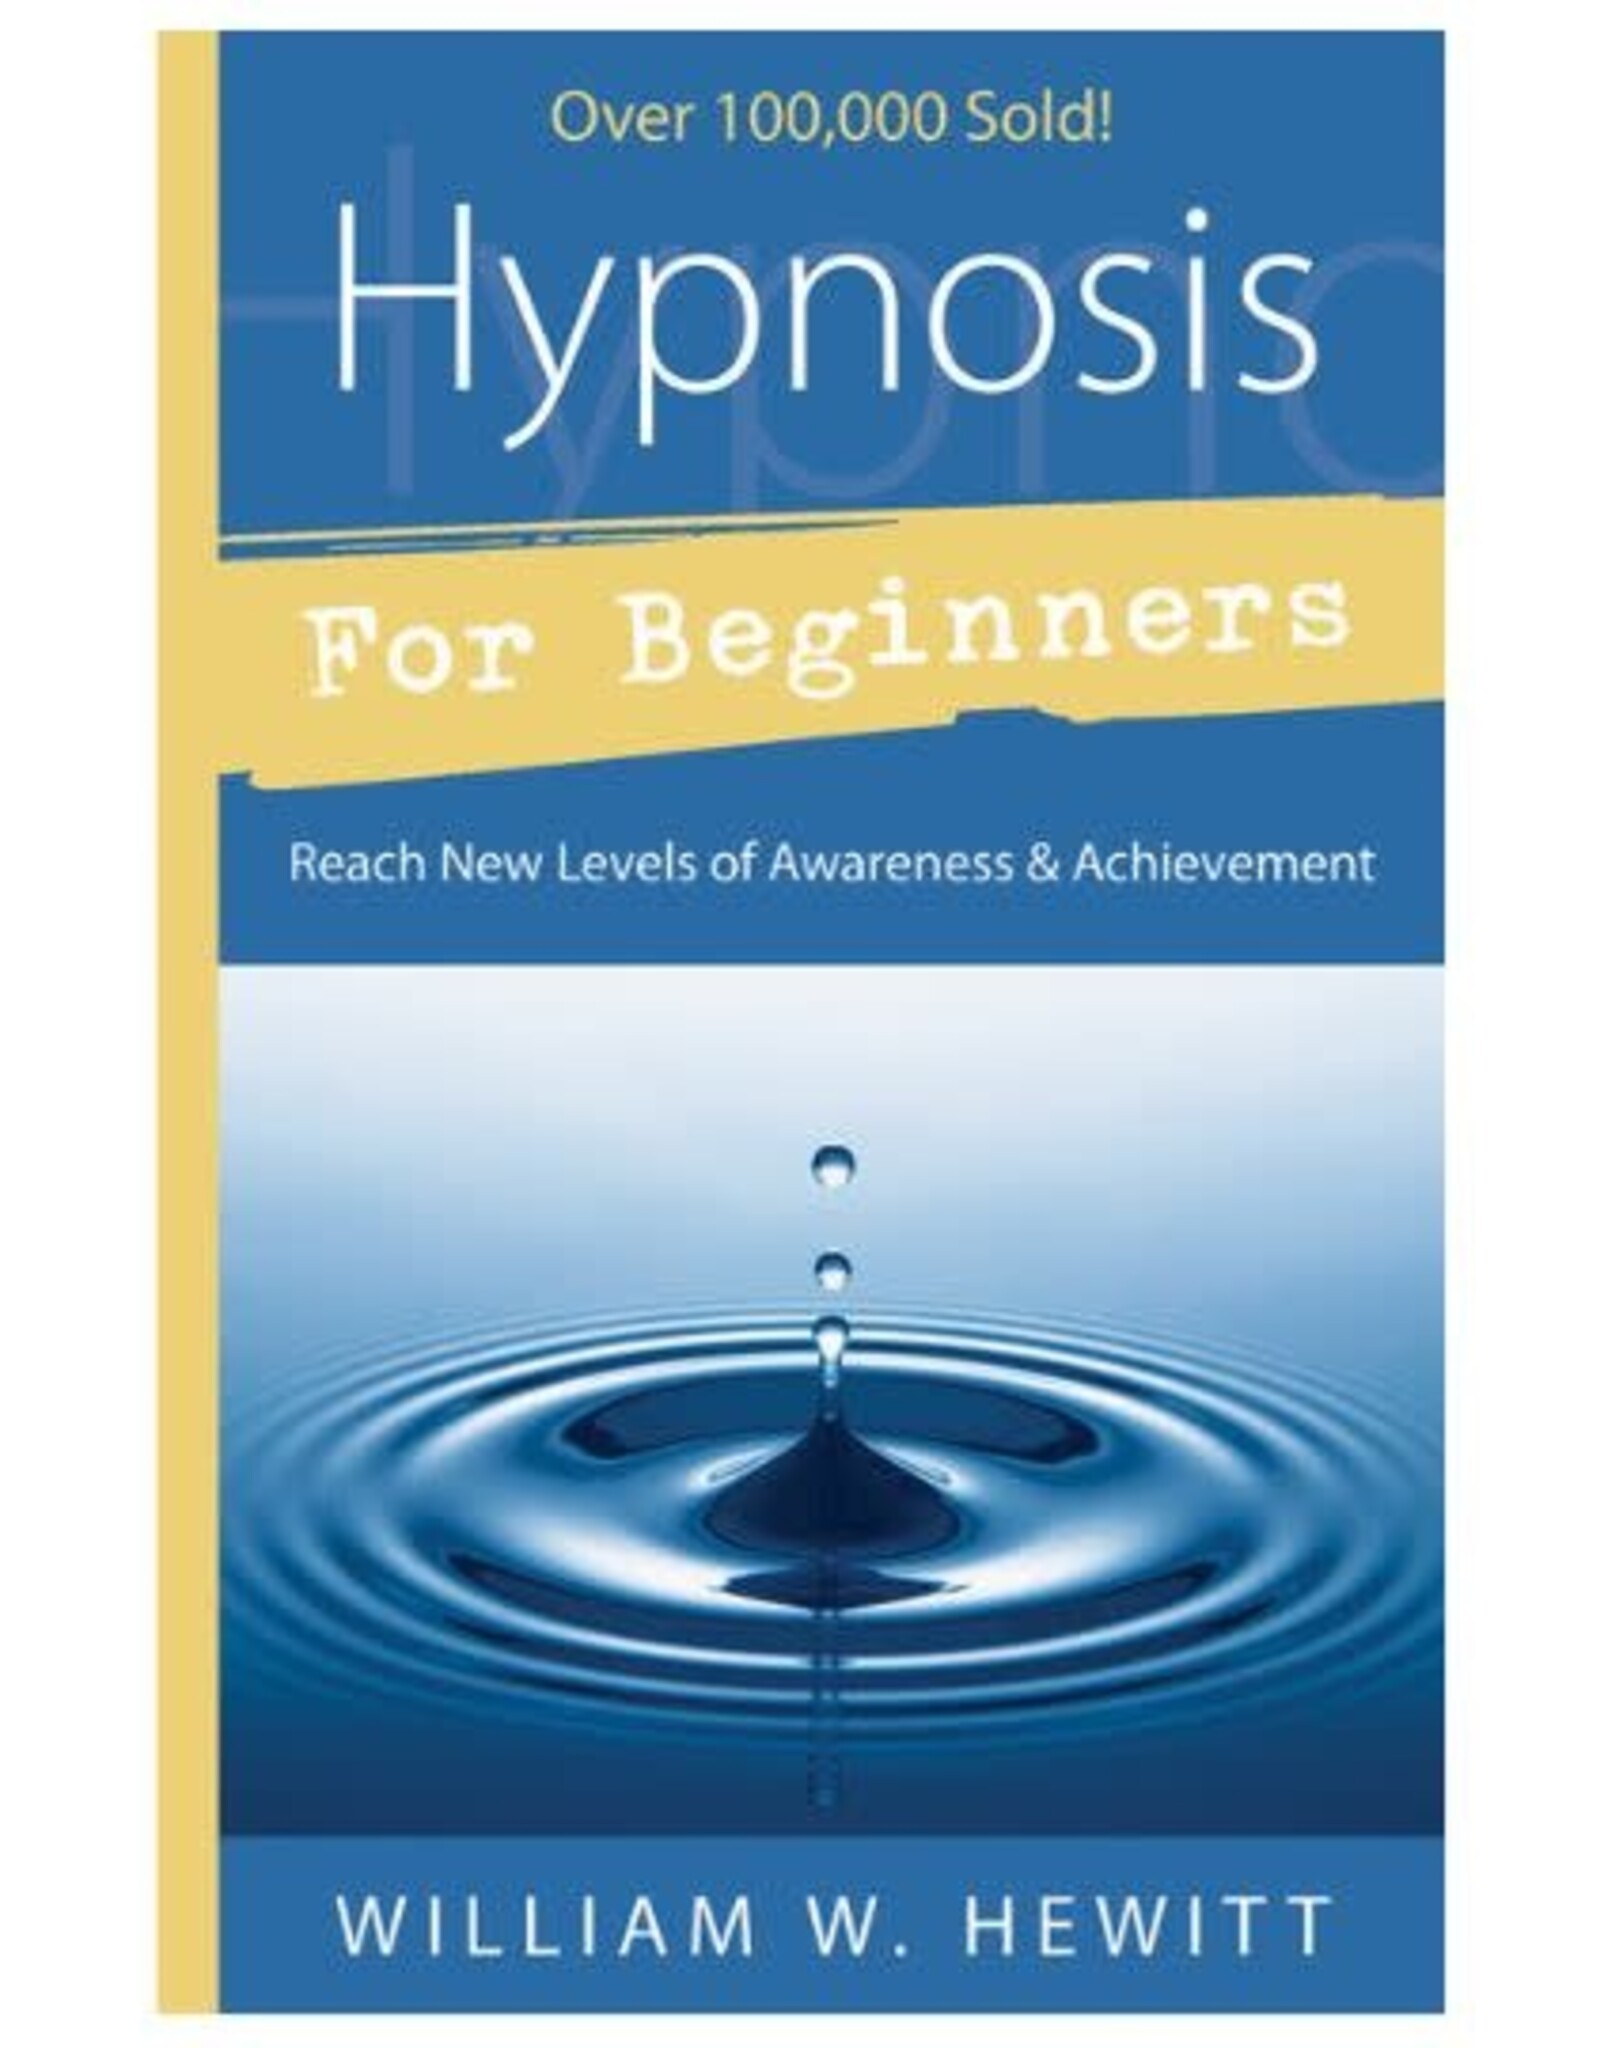 William W. Hewitt Hypnosis For Beginners by William W. Hewitt